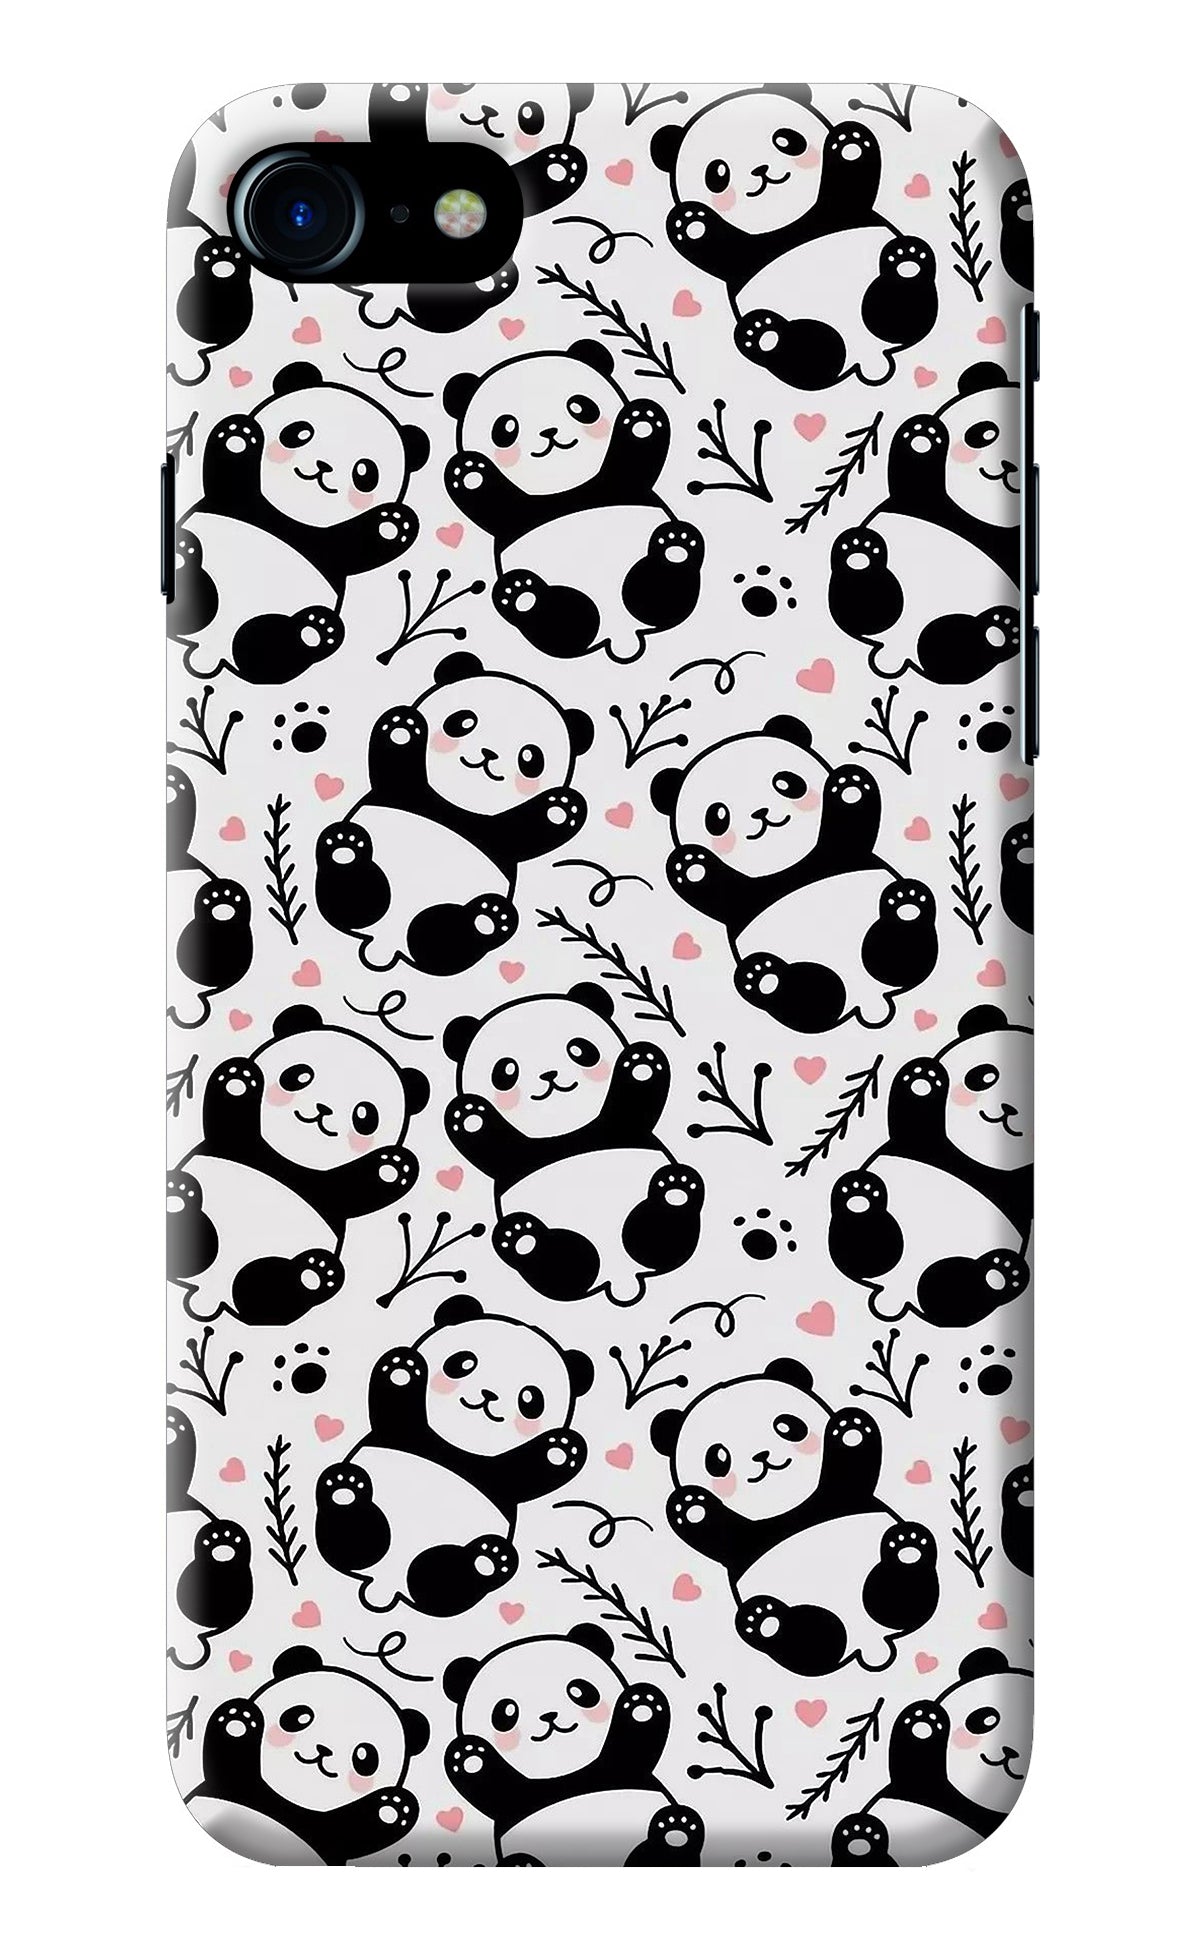 Cute Panda iPhone 8/SE 2020 Back Cover